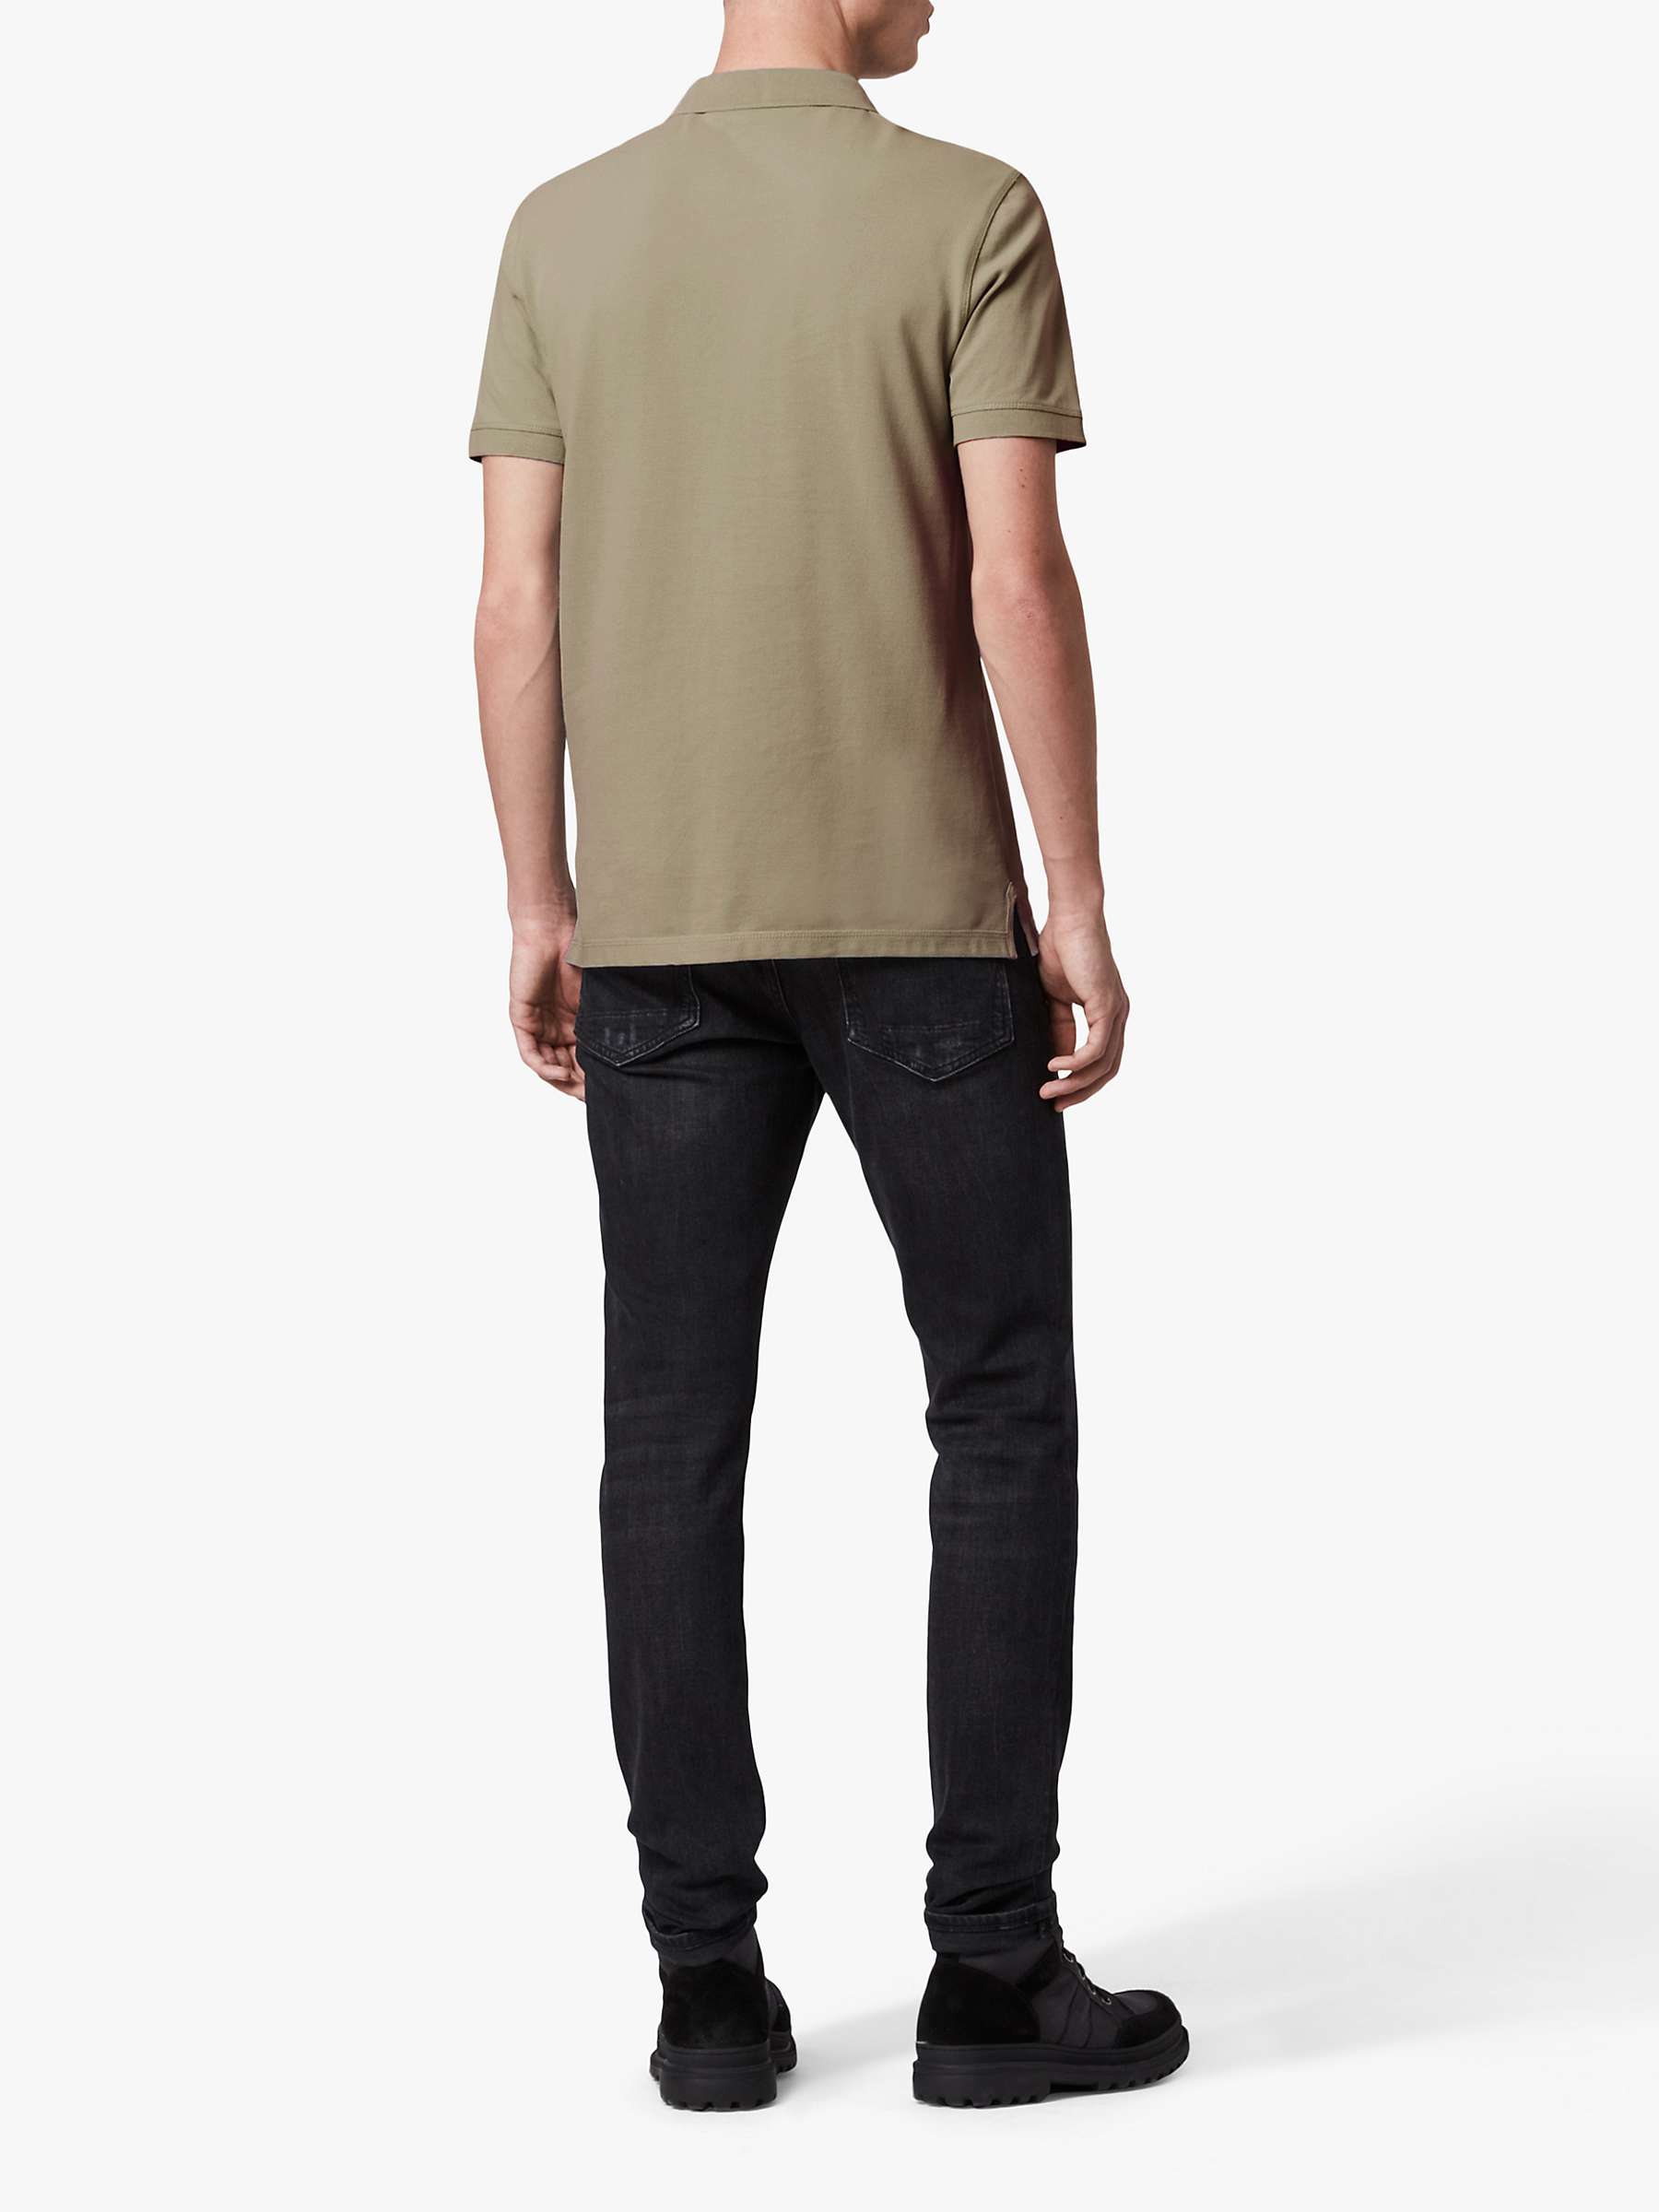 Buy AllSaints Reform Short Sleeve Slim Polo Shirt, Safari Taupe Online at johnlewis.com